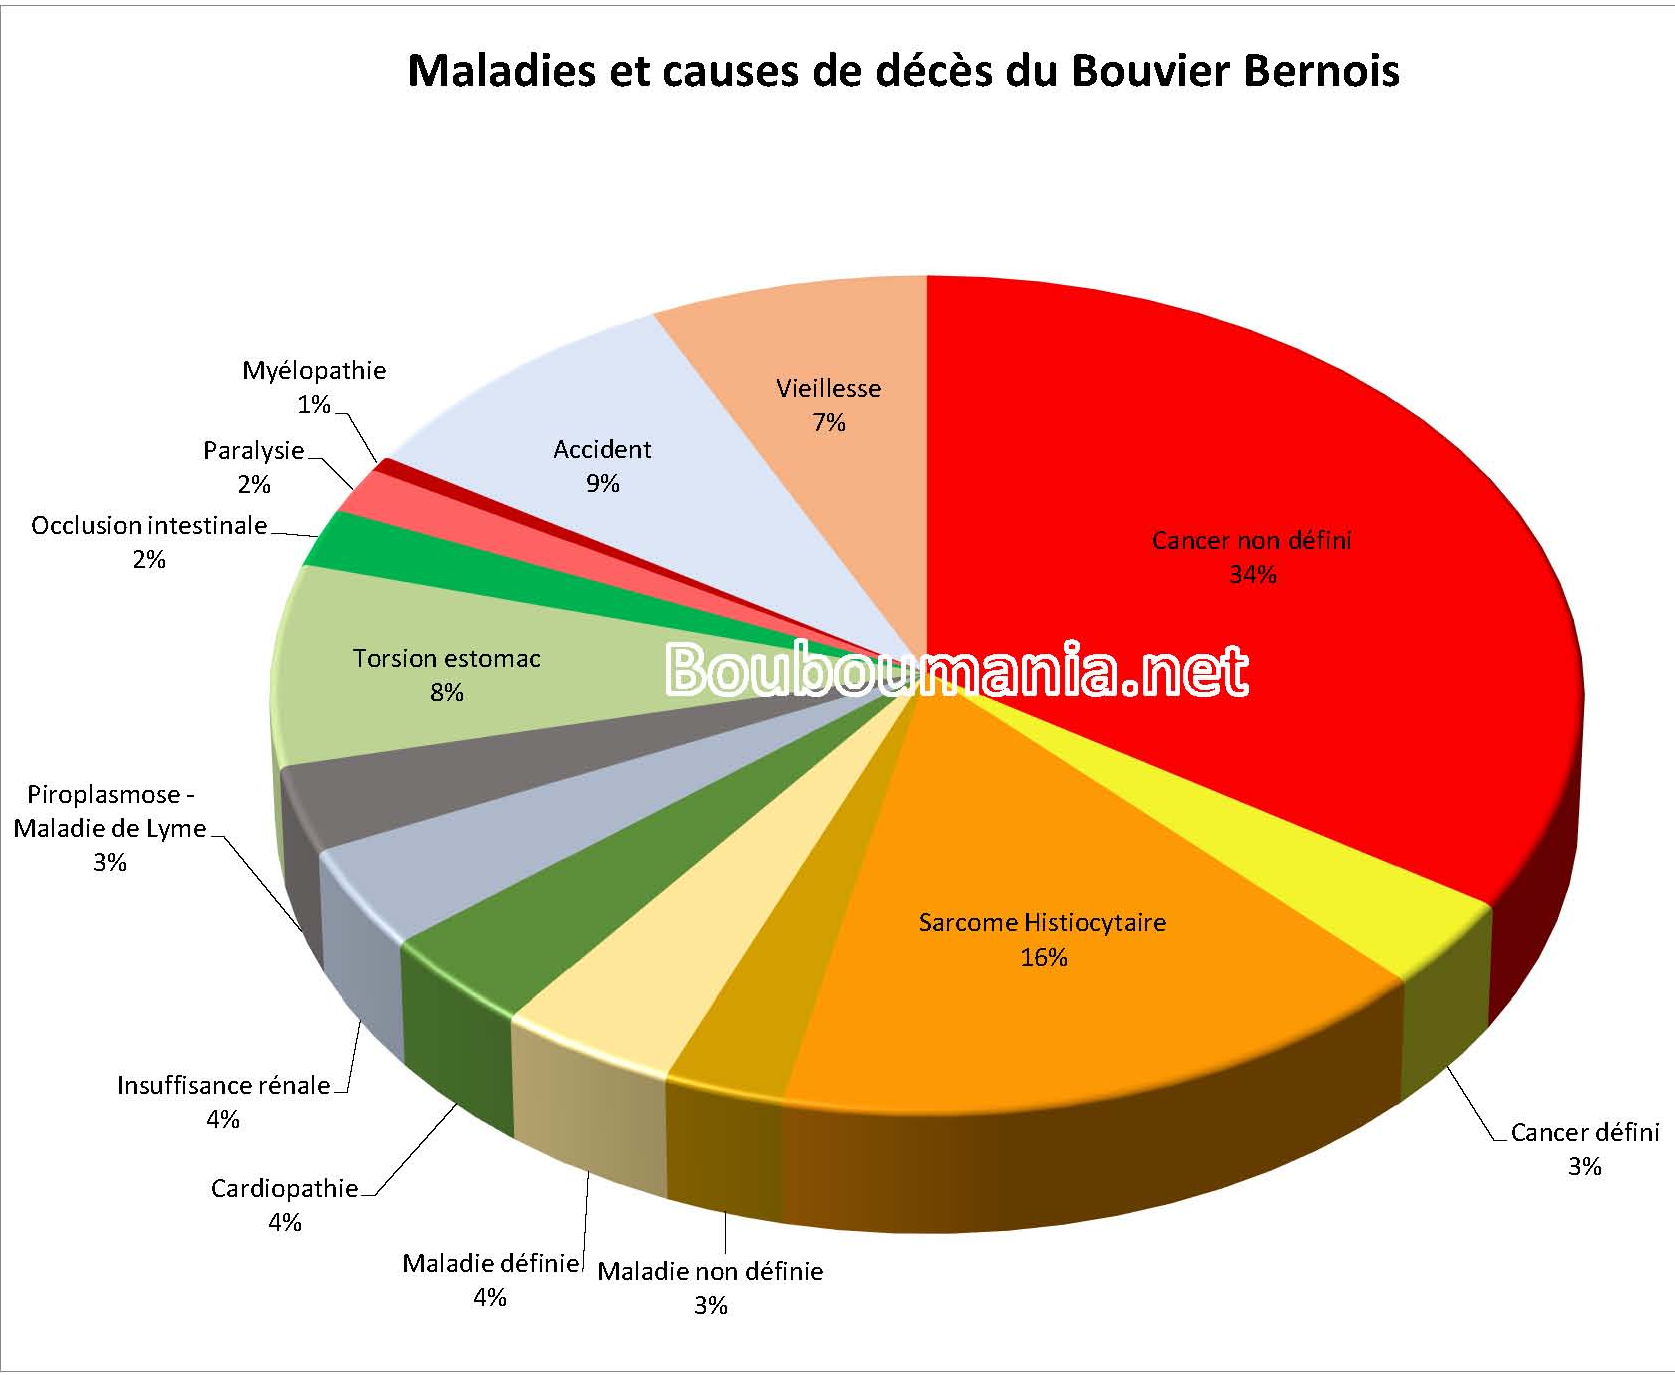 Graph causes dcs Bouvier Bernois site bouboumania